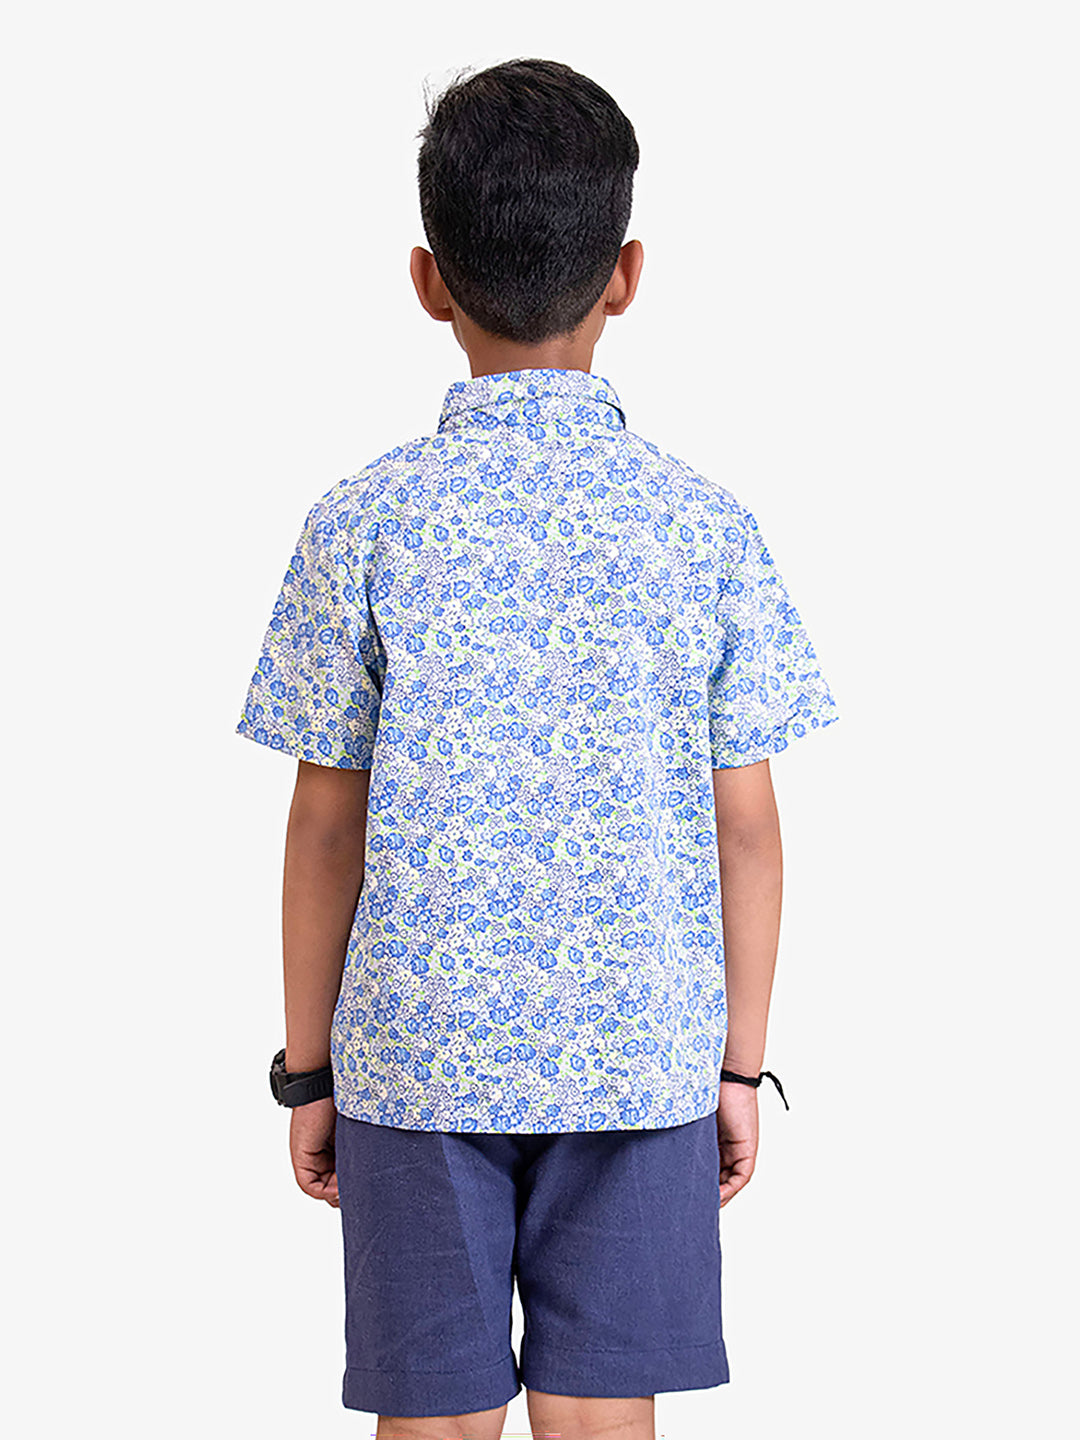 Boys Blue Floral Printed Cotton Shirt